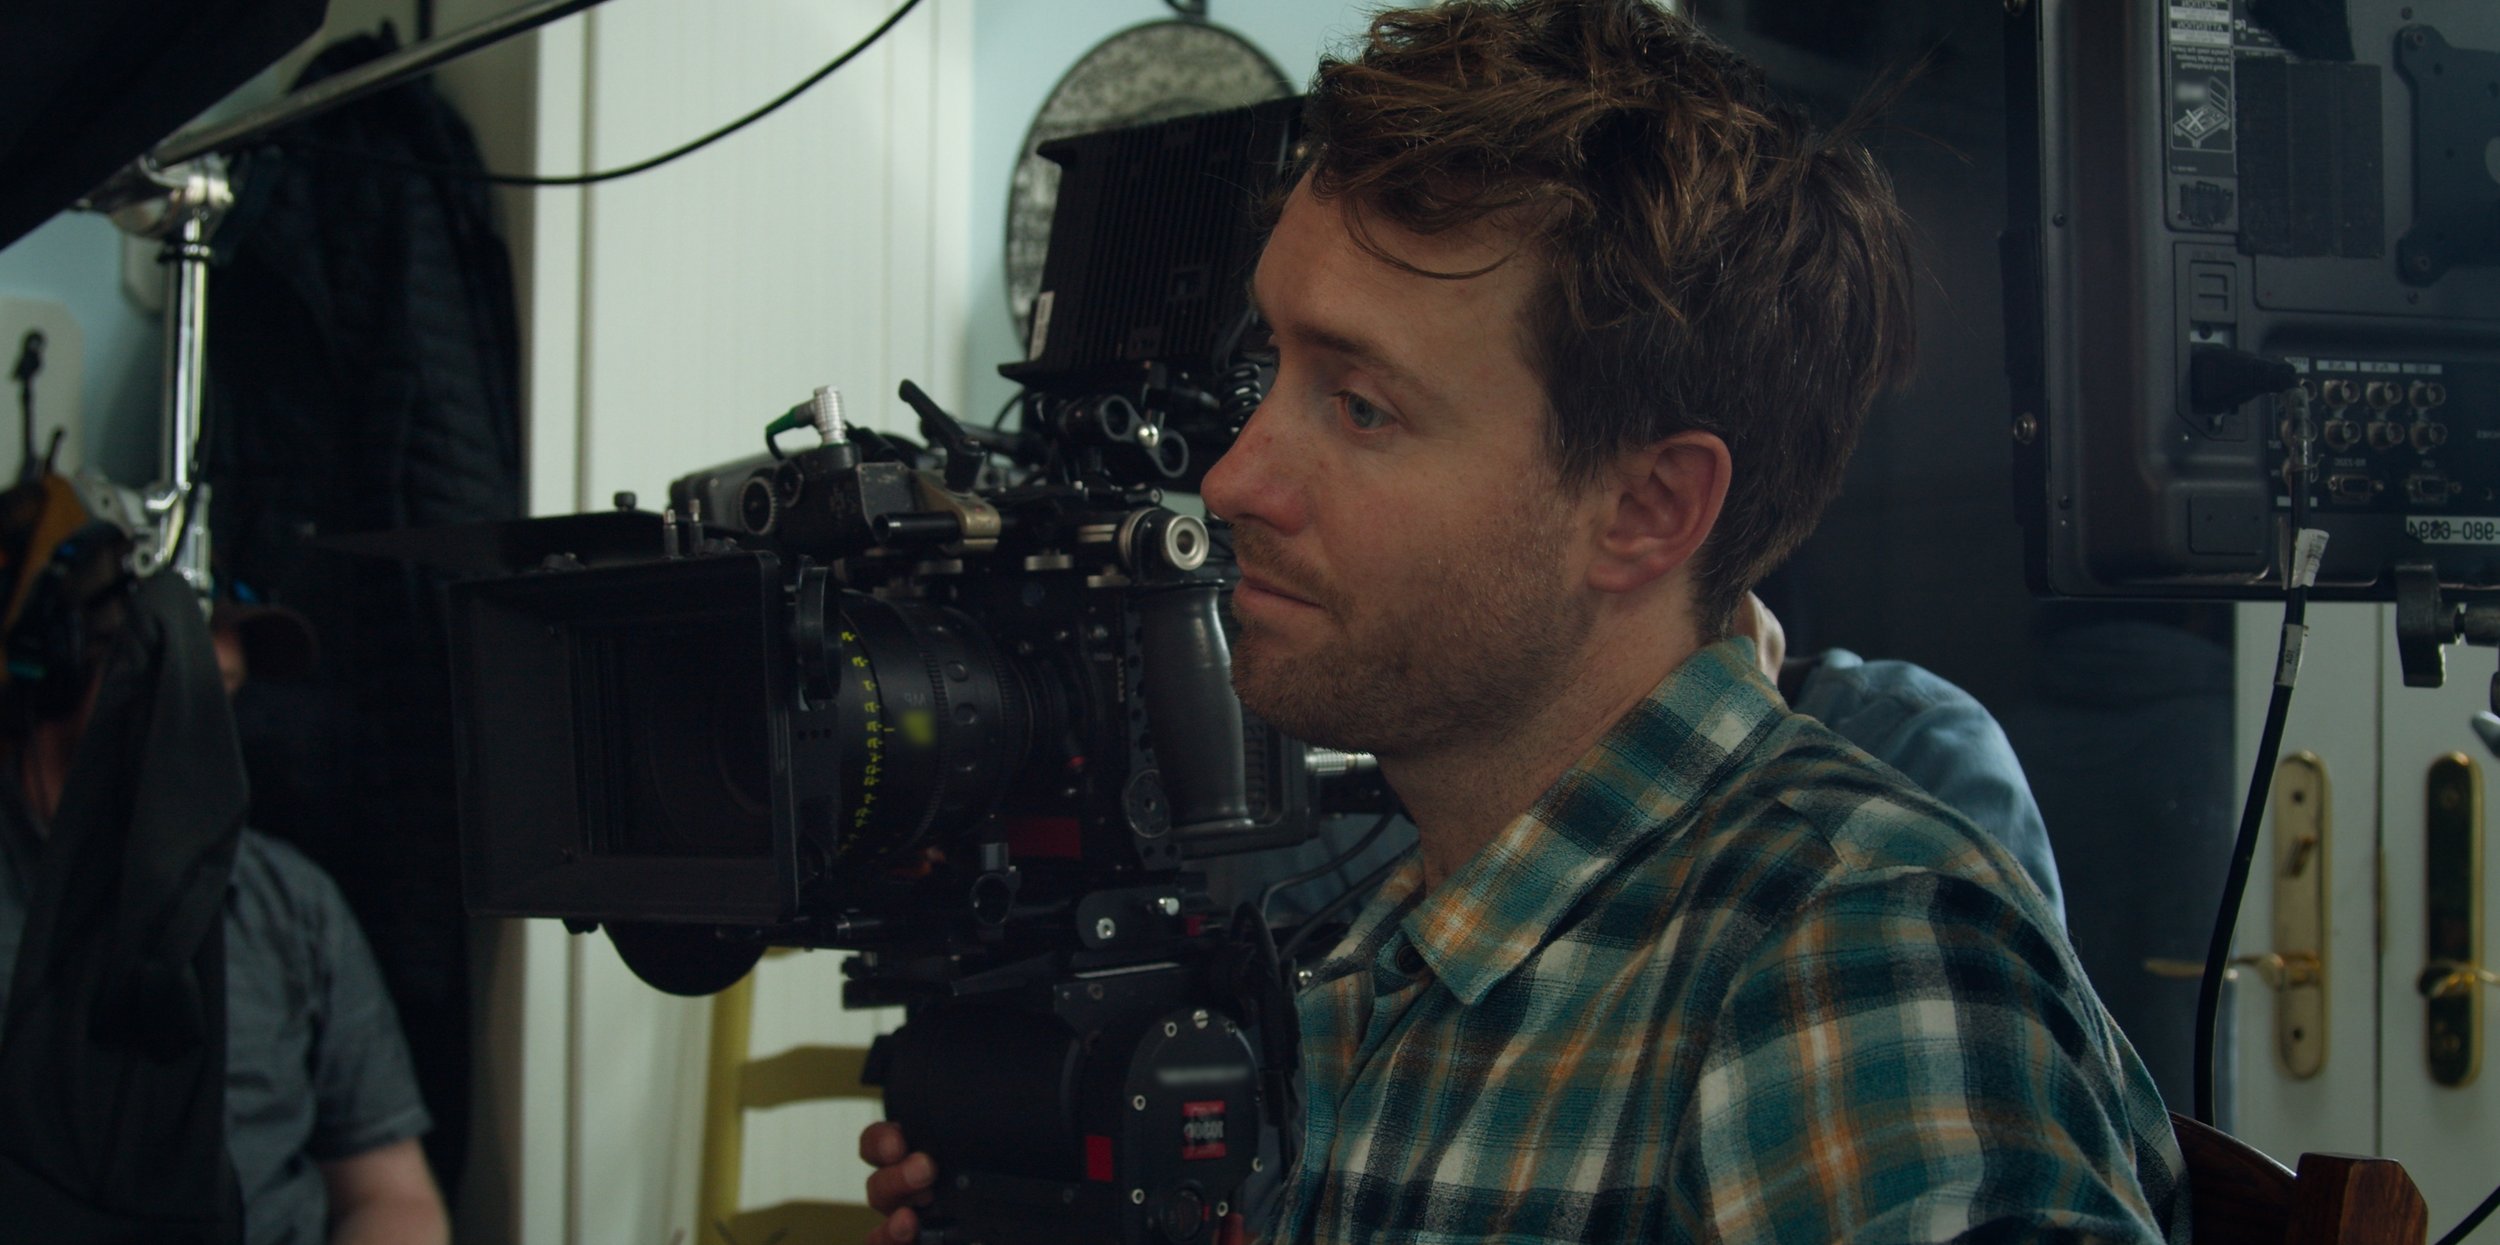  Bozeman, MT - Director, Max Lowe, directing an emotional scene. 